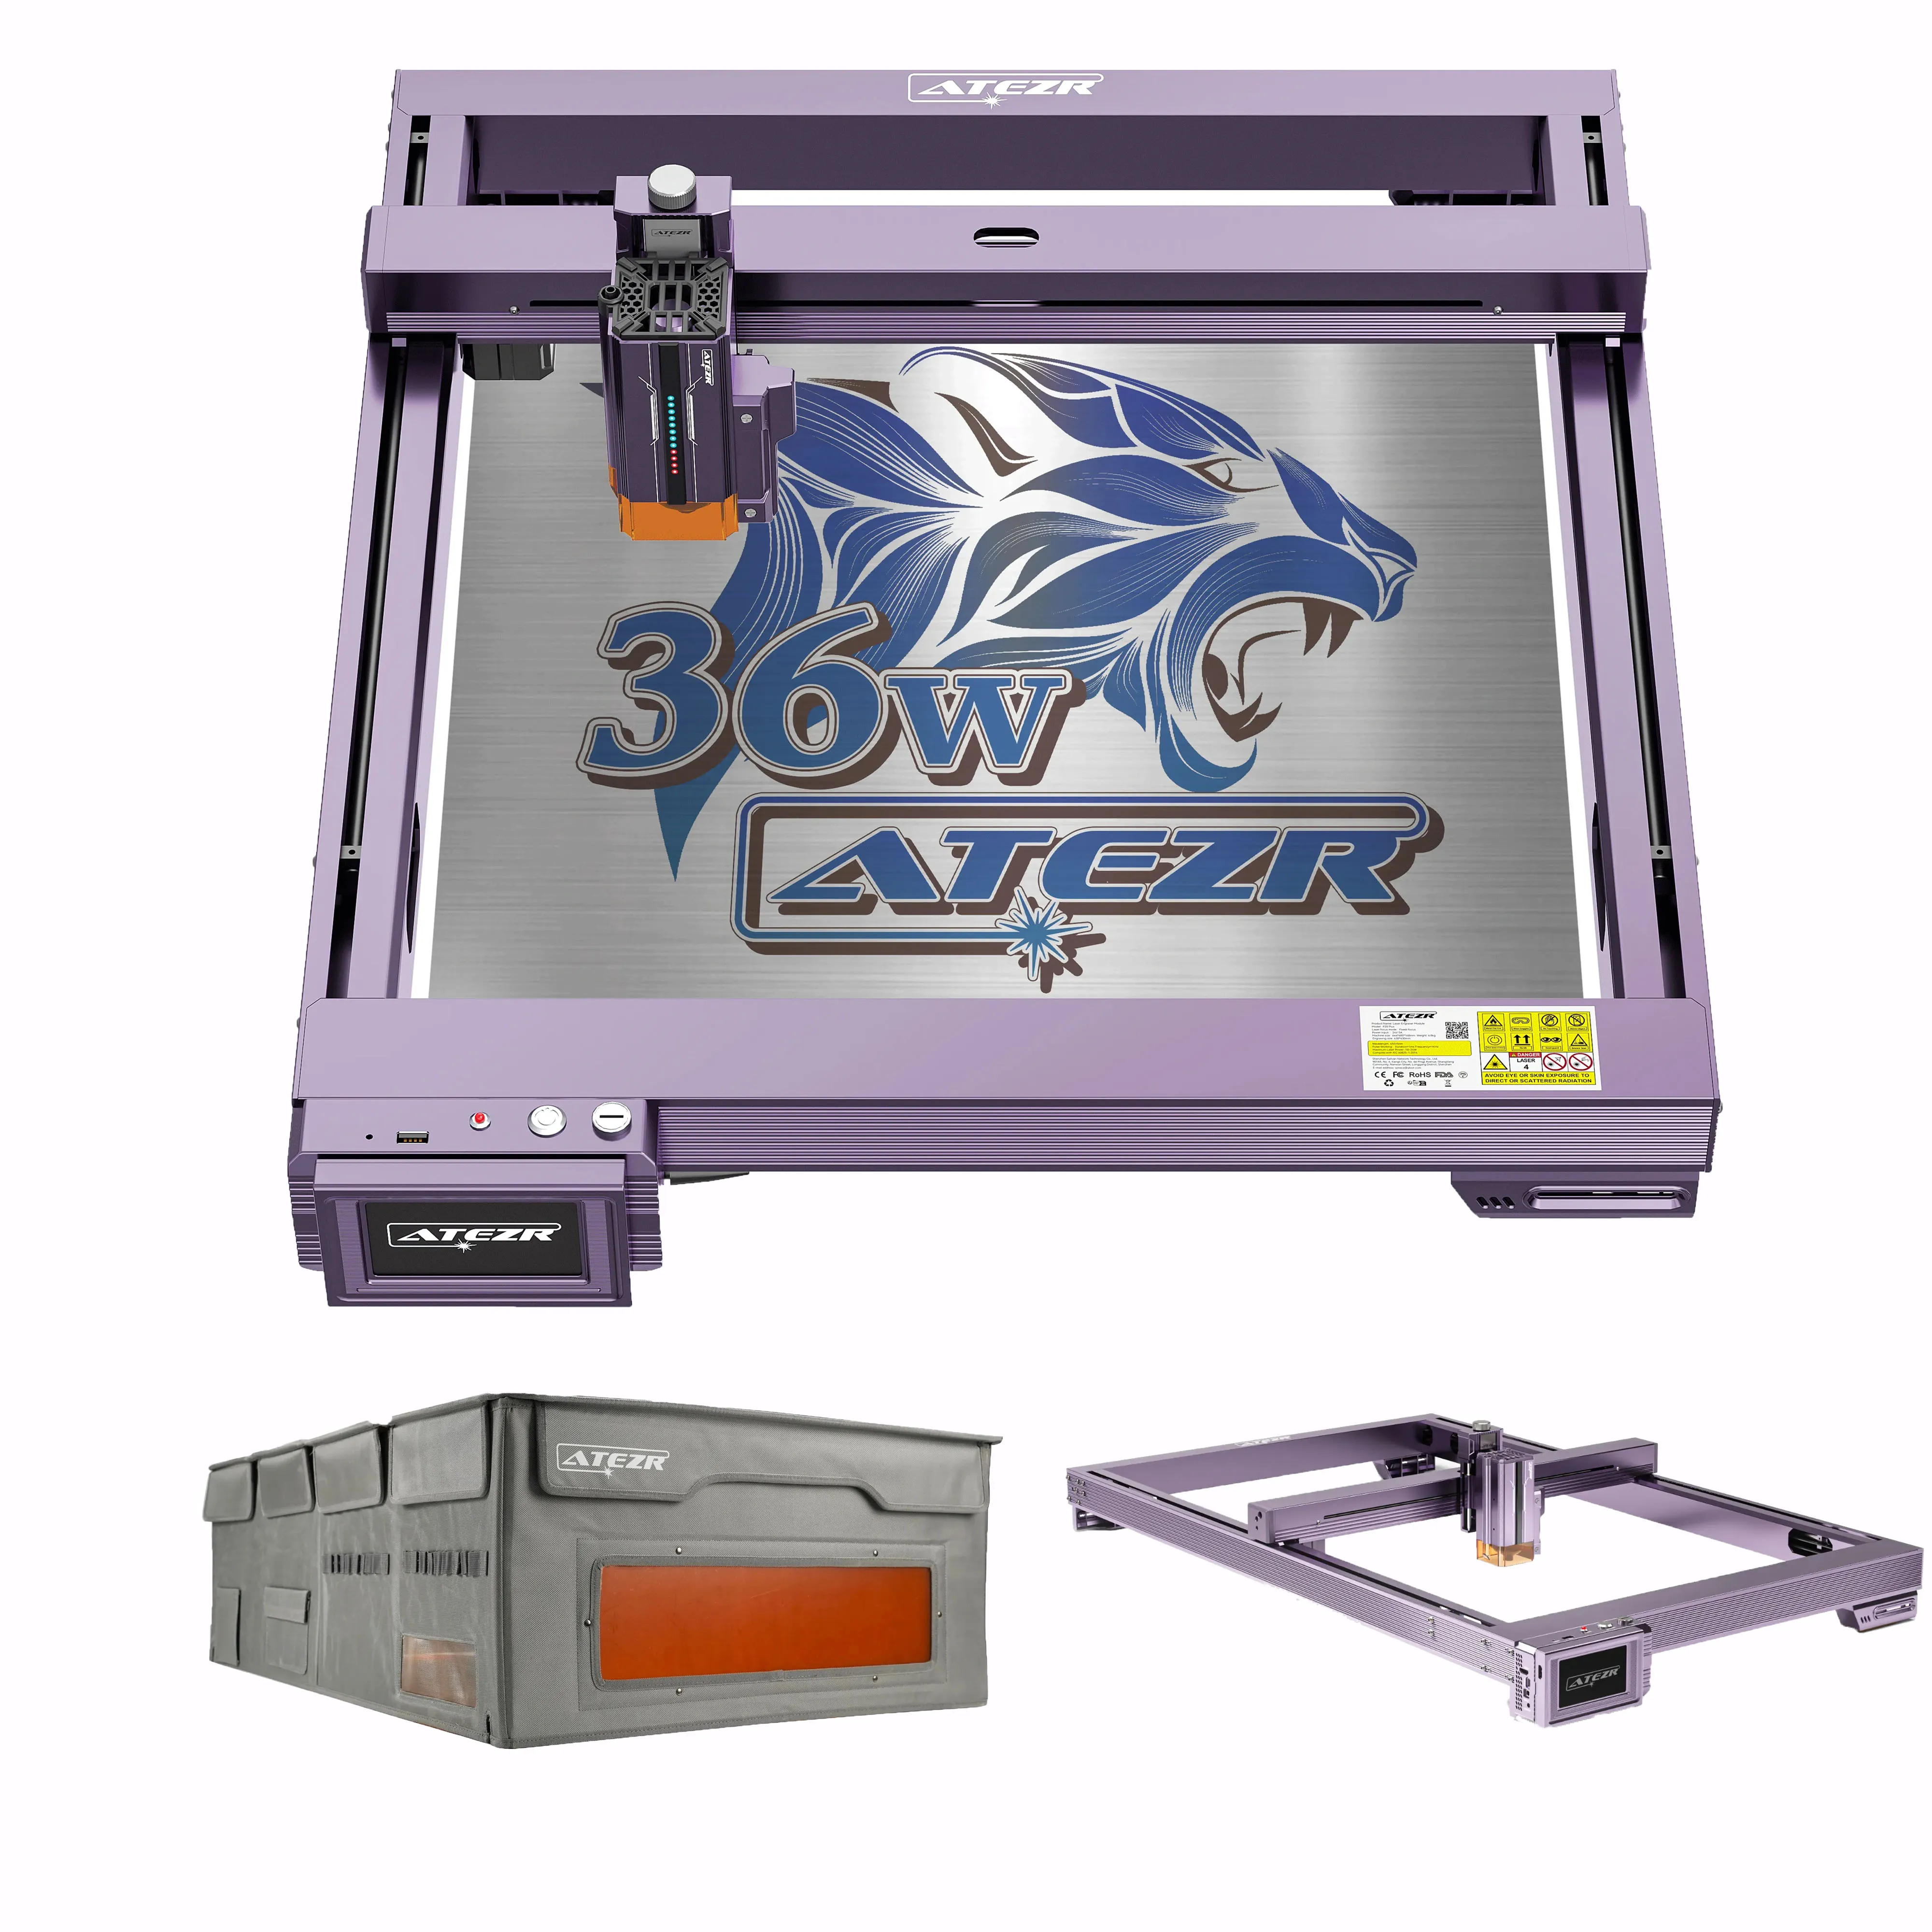 Atezr L2 36W Laser Engraver with As Plus & Ke-2 Extension Kit 